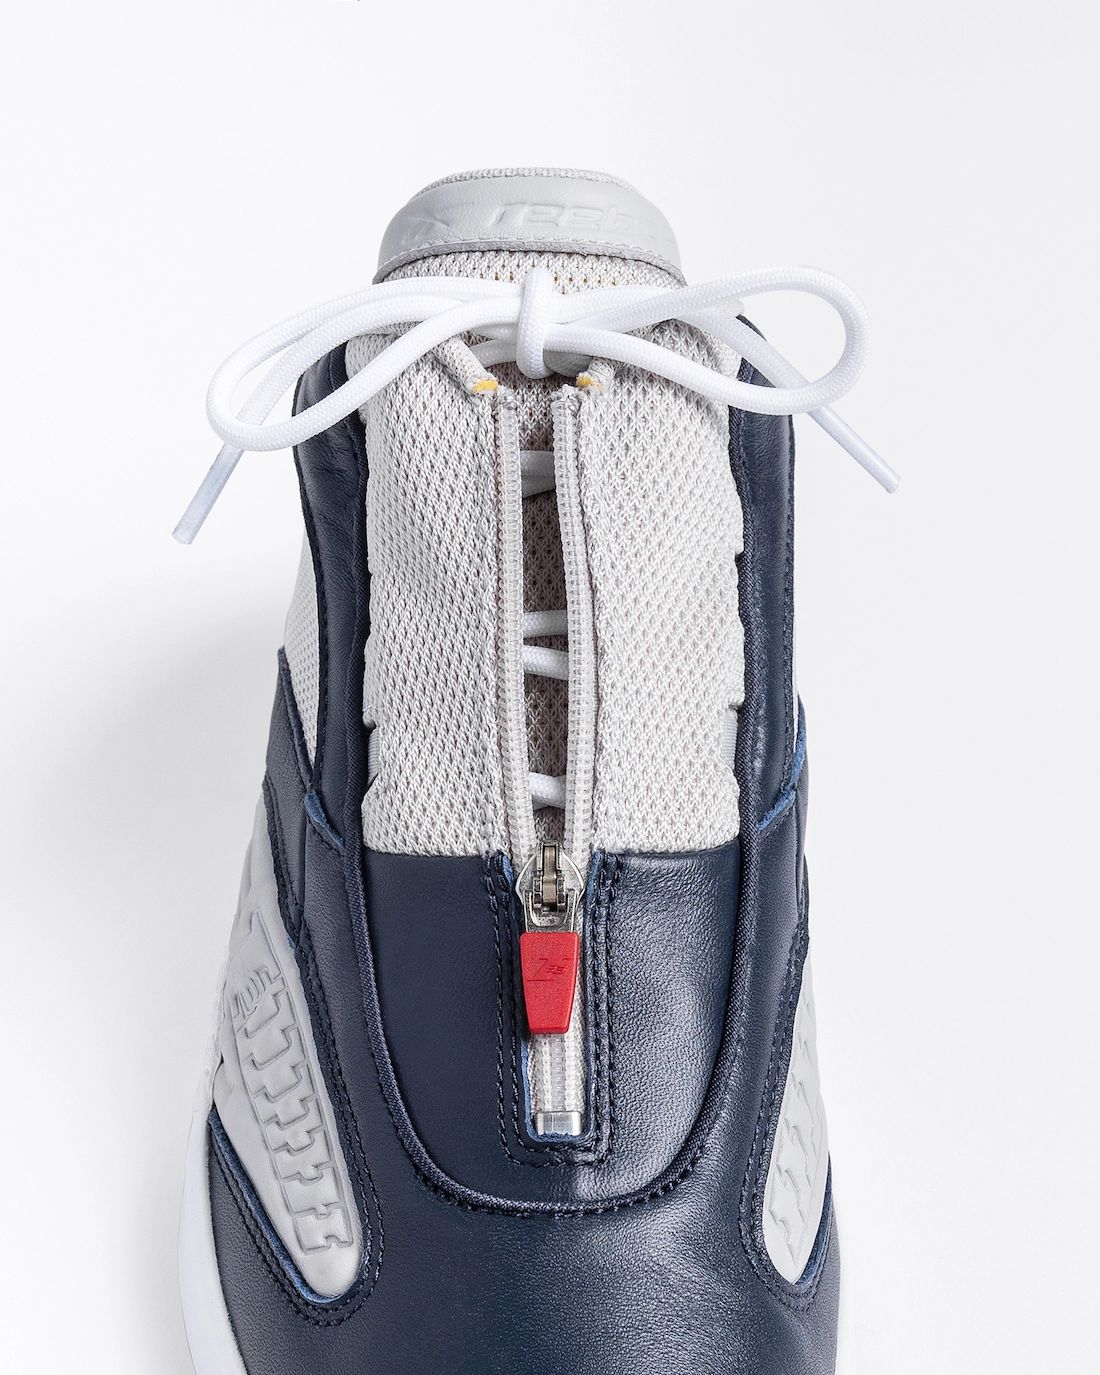 Packer Shoes Reebok Answer IV Ultramarine Release Date